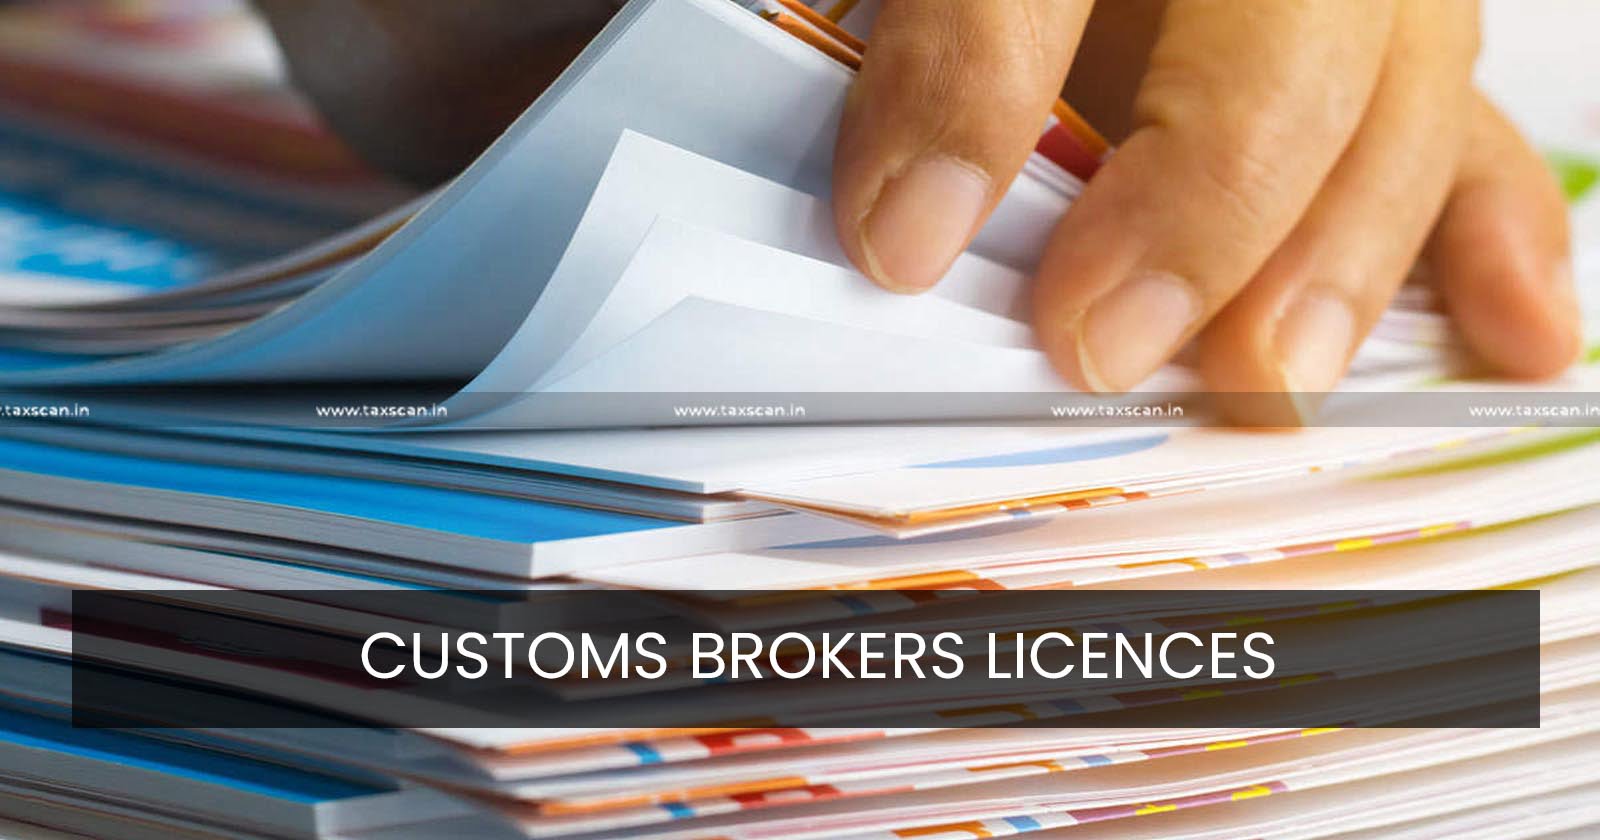 CESTAT - Customs Brokers Licences - taxscan